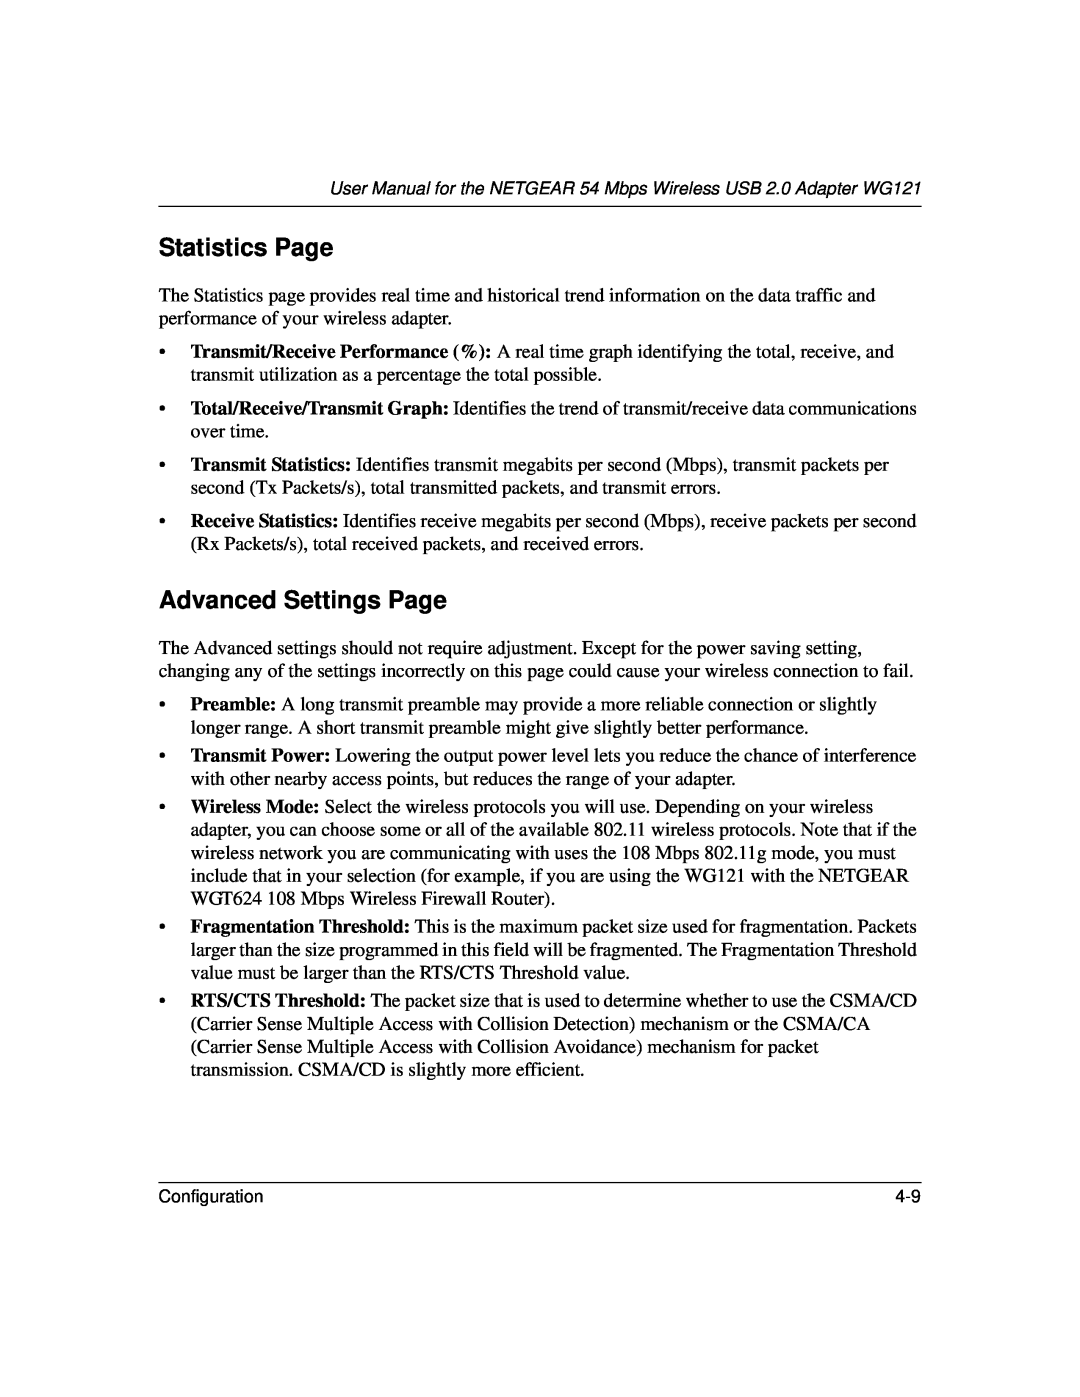 NETGEAR WG121 user manual Statistics Page, Advanced Settings Page 